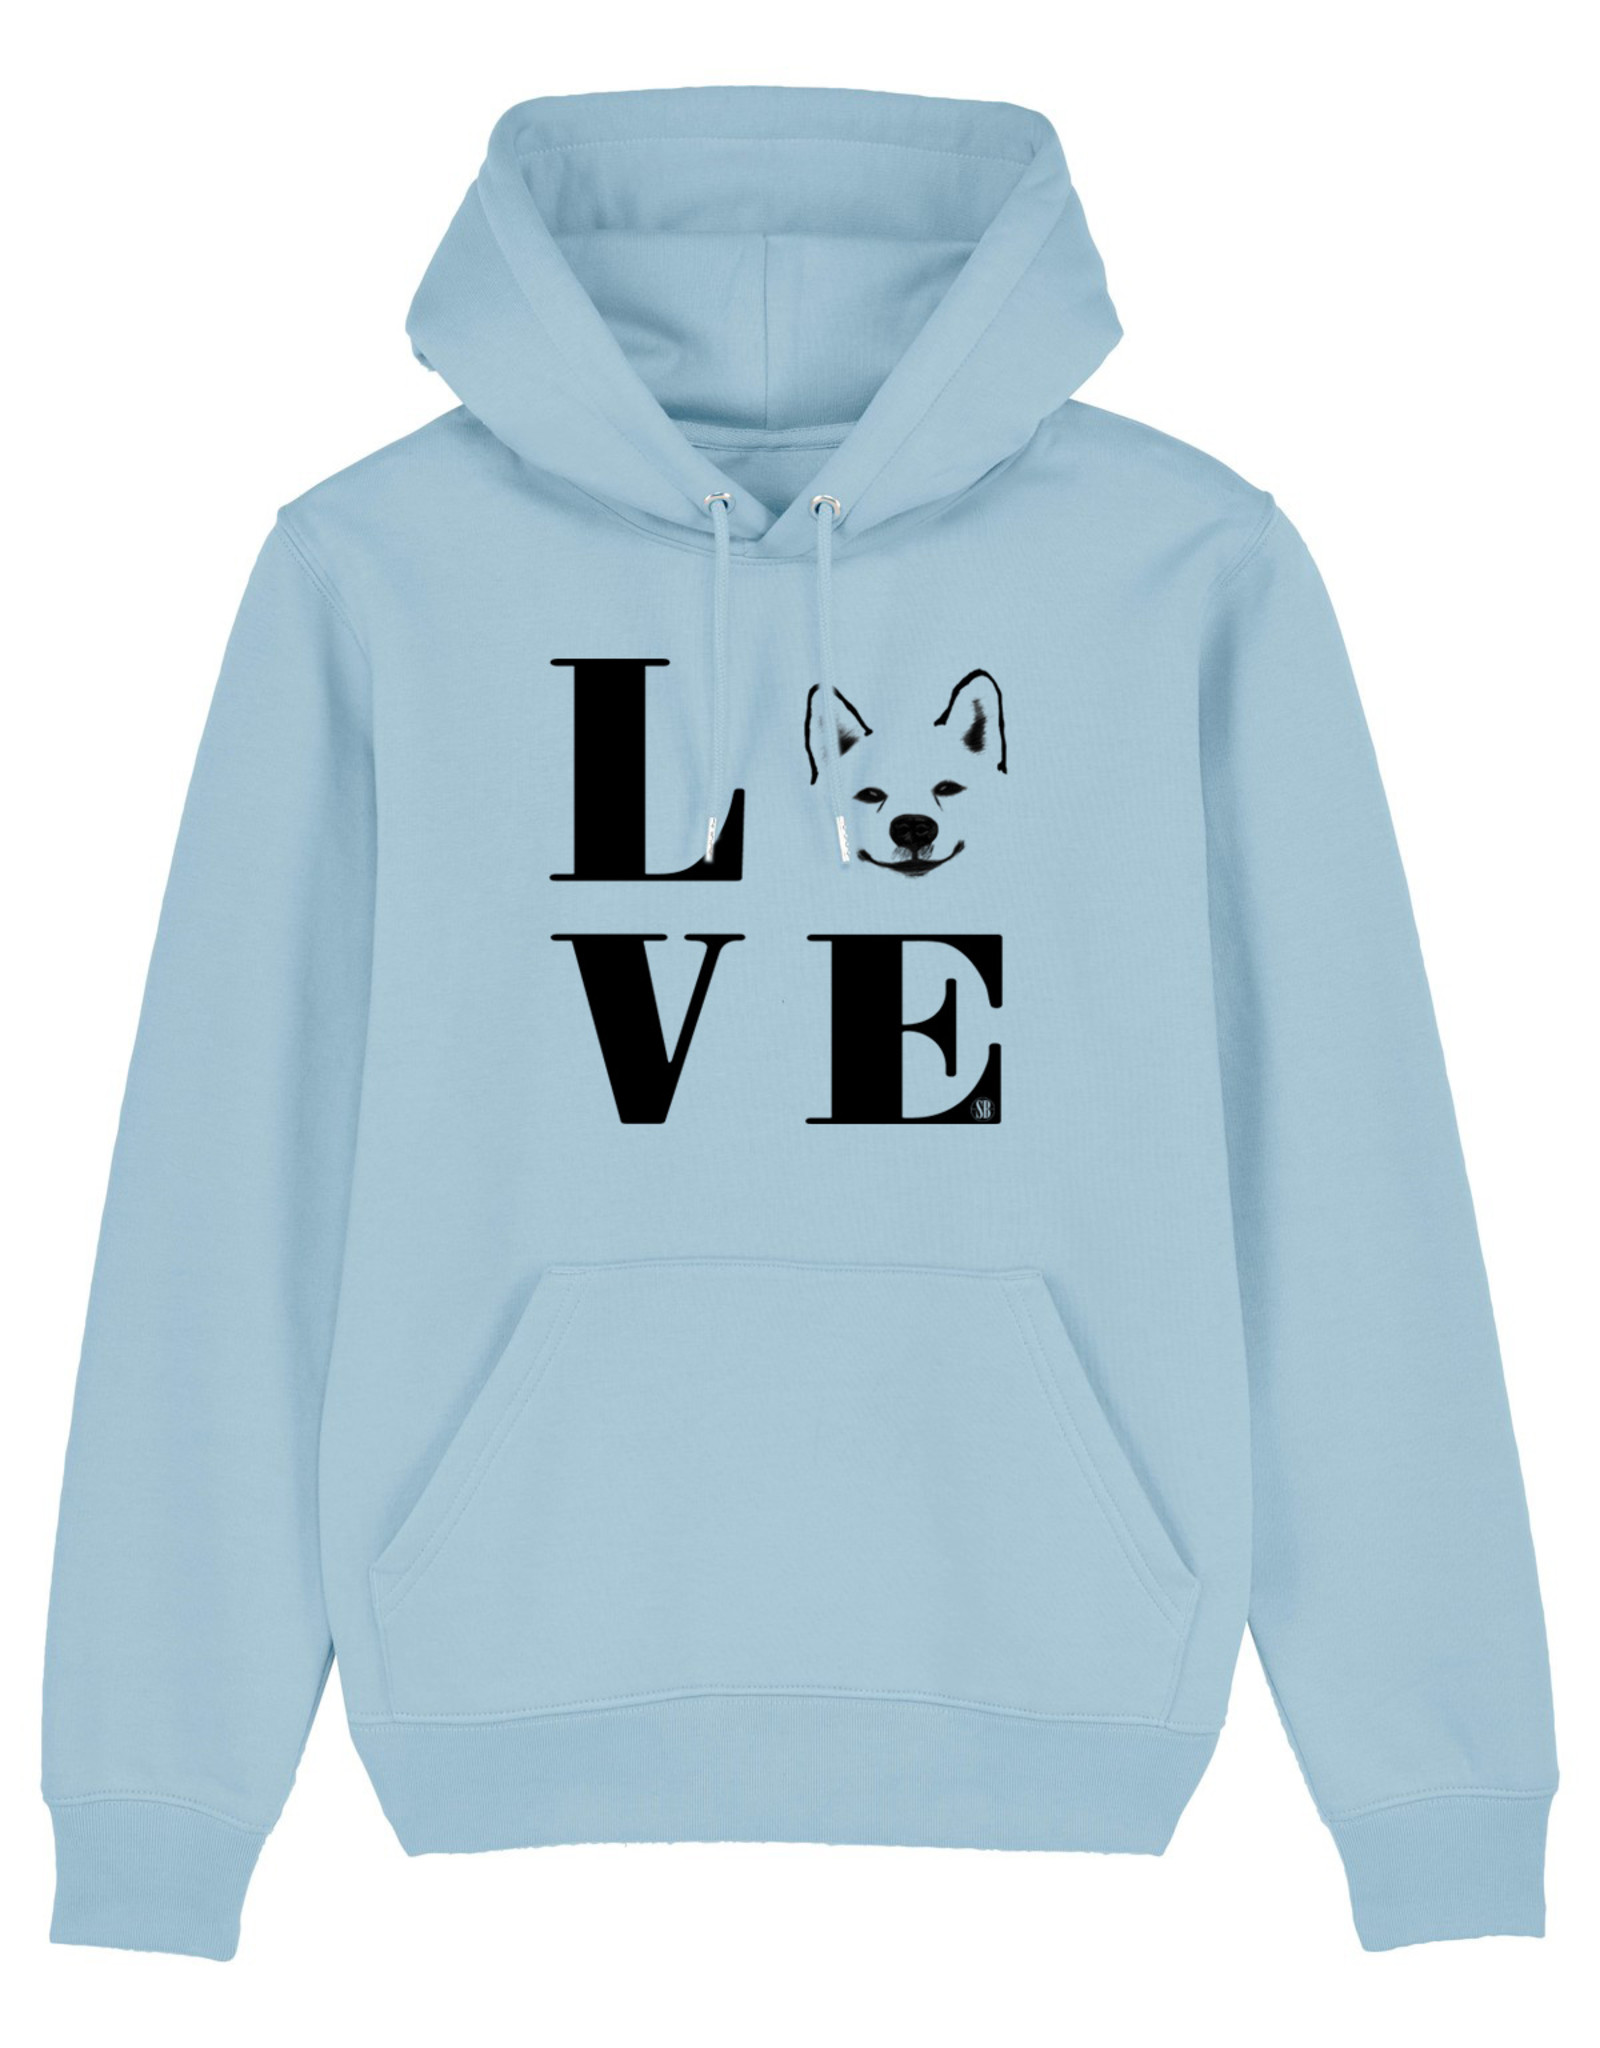 Shiba Boutique - Shiba Inu Love Dog Hoodie Sweater Women